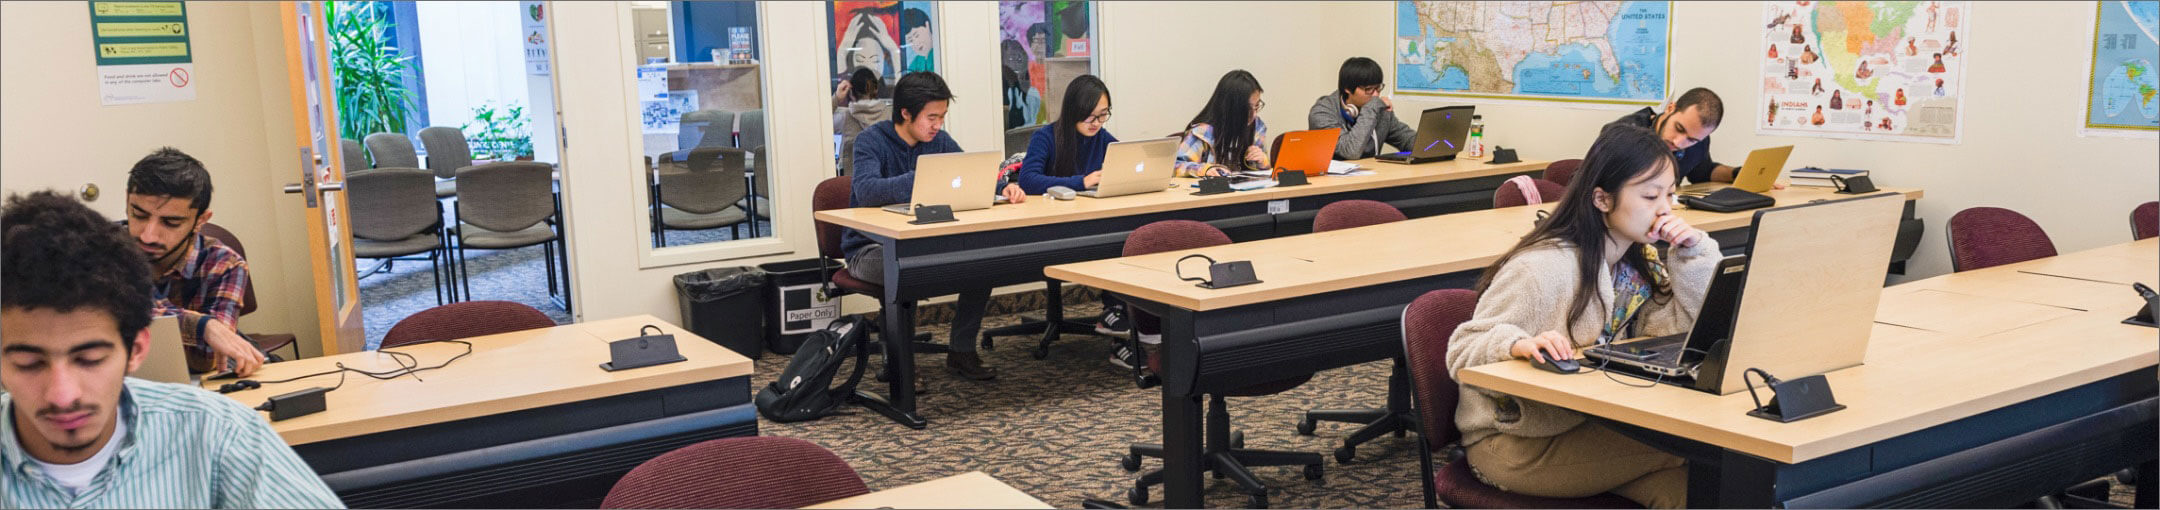 Students sitting at desks.